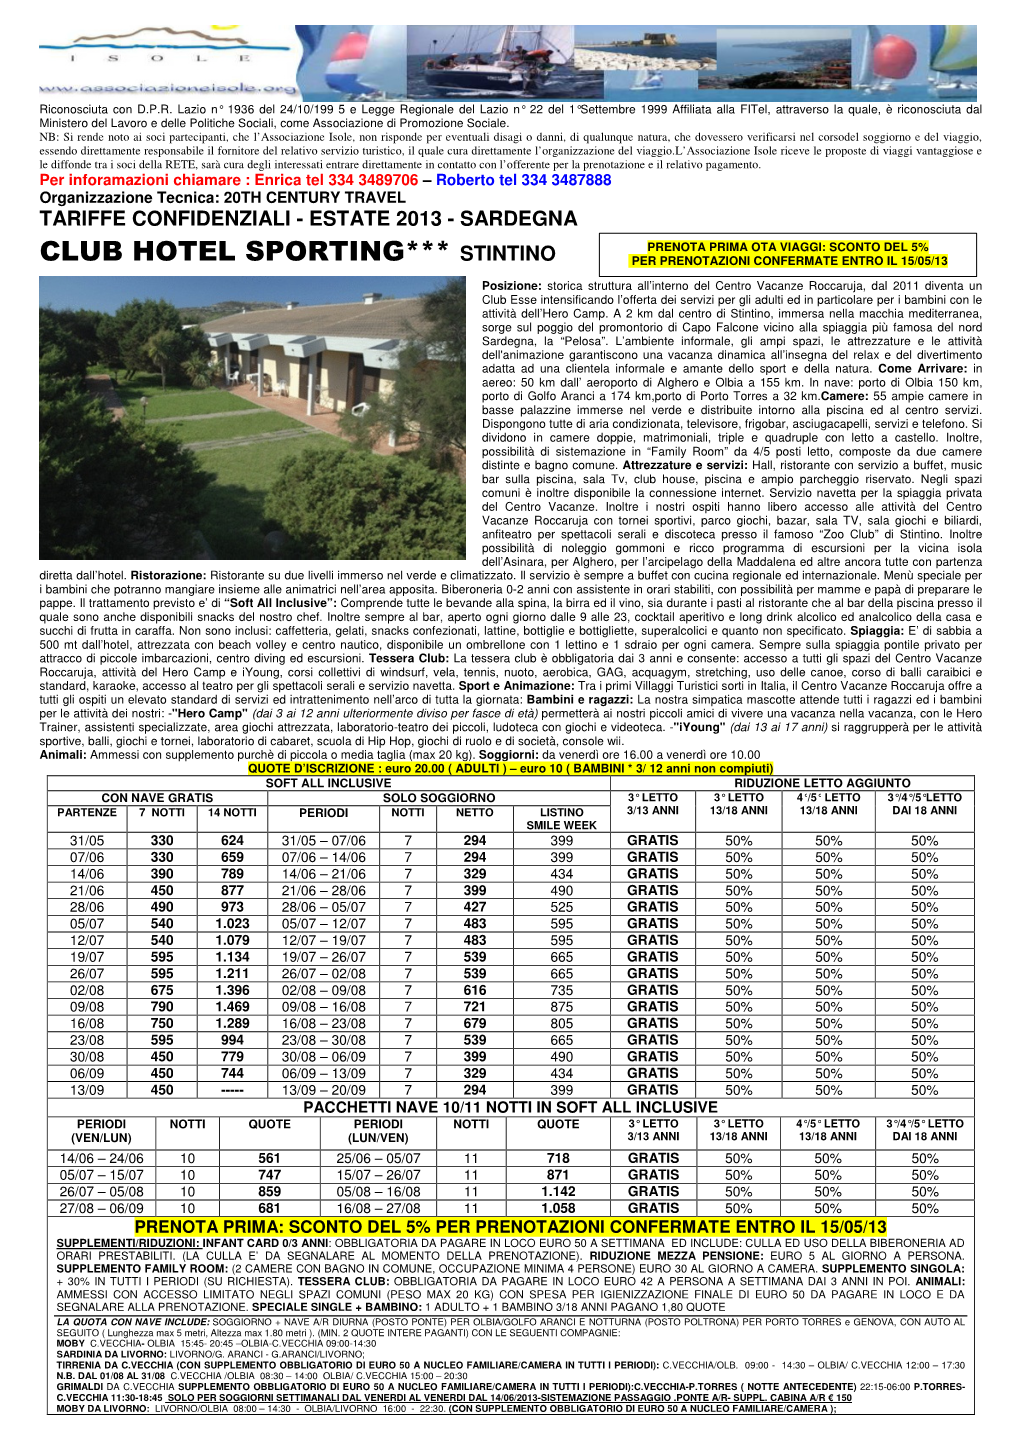 Club Hotel Sporting*** Stintino